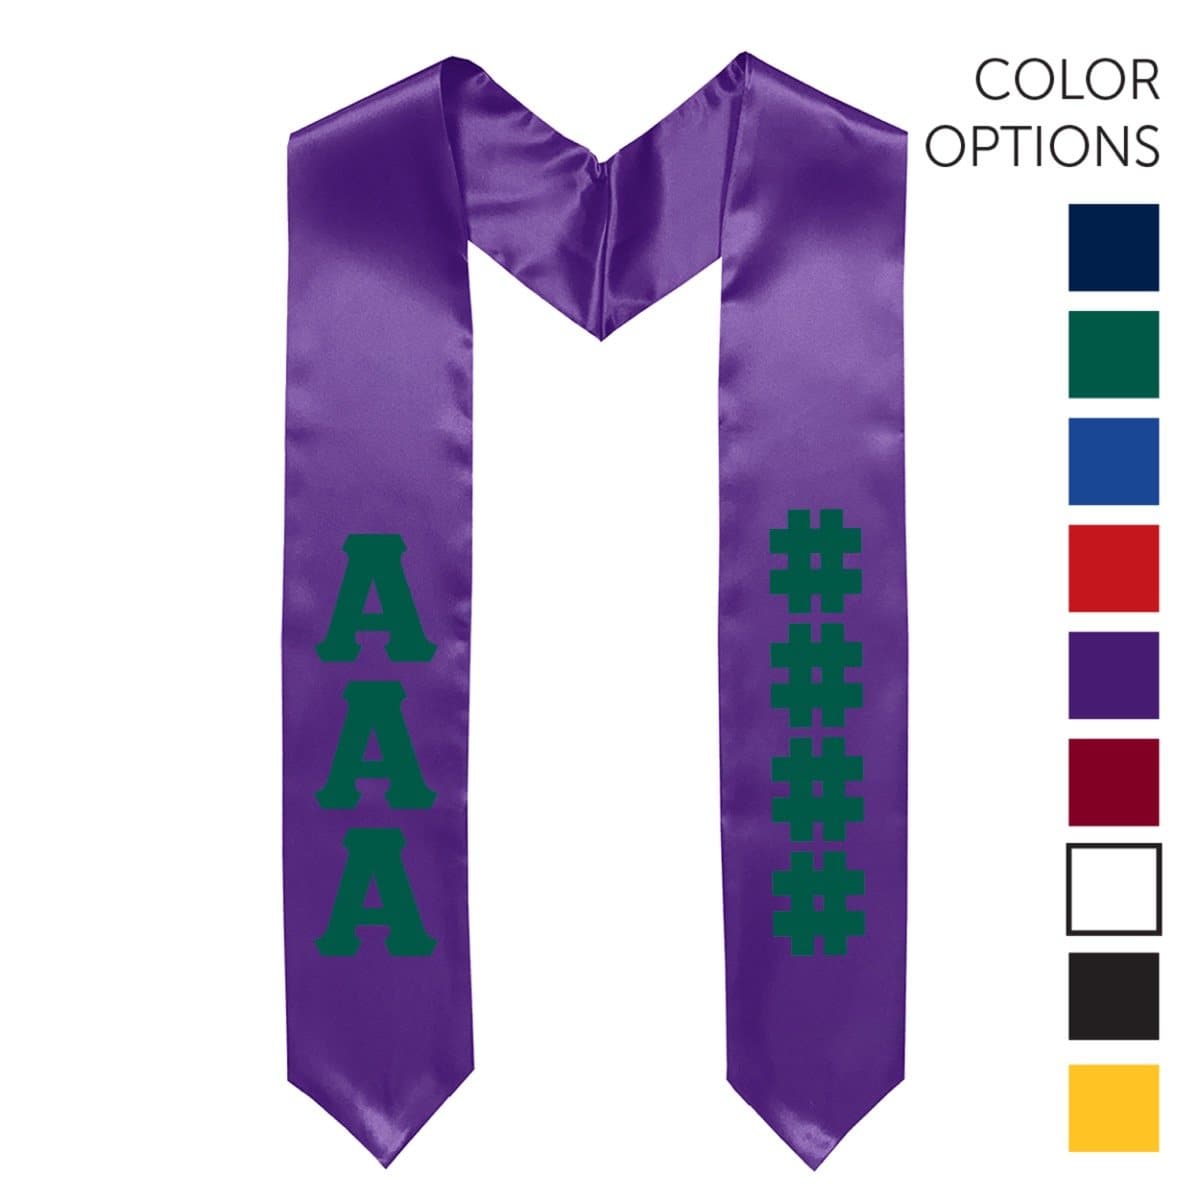 Tri Delta Pick Your Own Colors Graduation Stole | Delta Delta Delta | Apparel > Stoles